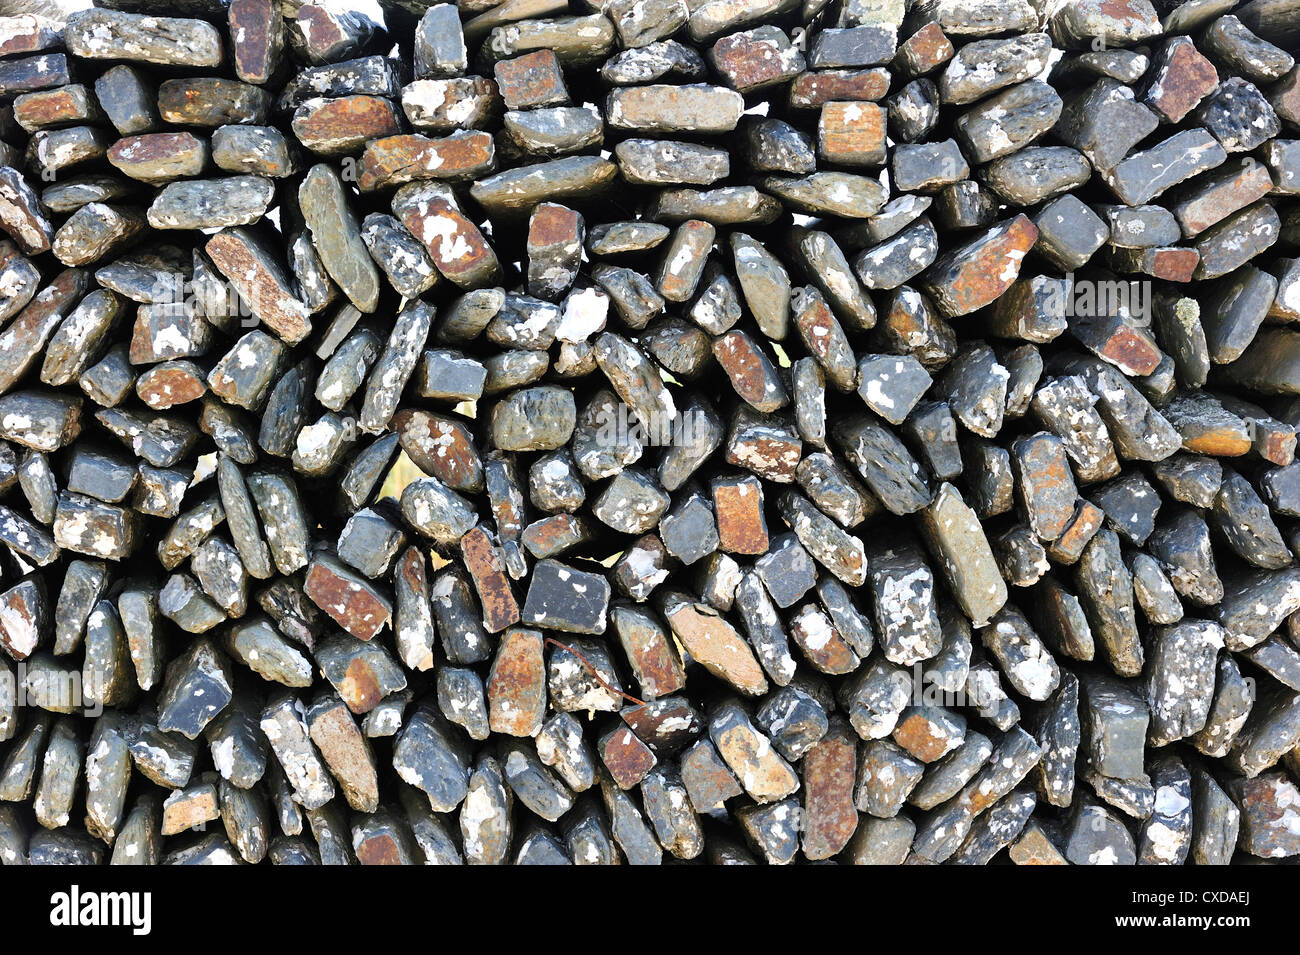 Piedras apiladas de criadero de ostras en la Baudissière cerca de dolus / Saint-Pierre-d'oléron, Ile d'oléron, Charente Marítimo, Francia Foto de stock